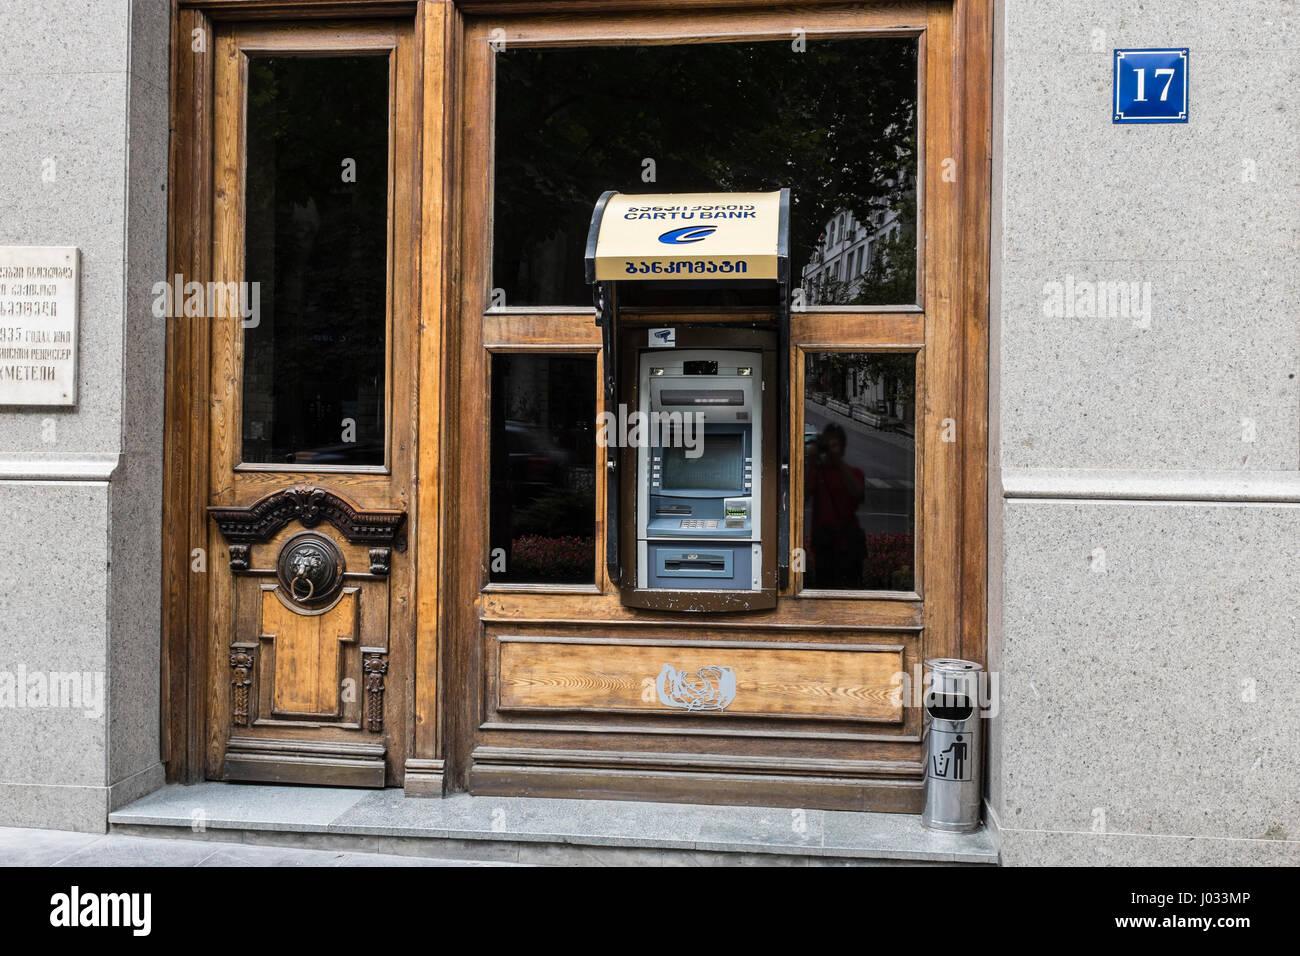 Bank ATM cash dispenser machine in Tbilisi, Georgia, Eastern Europe. Stock Photo